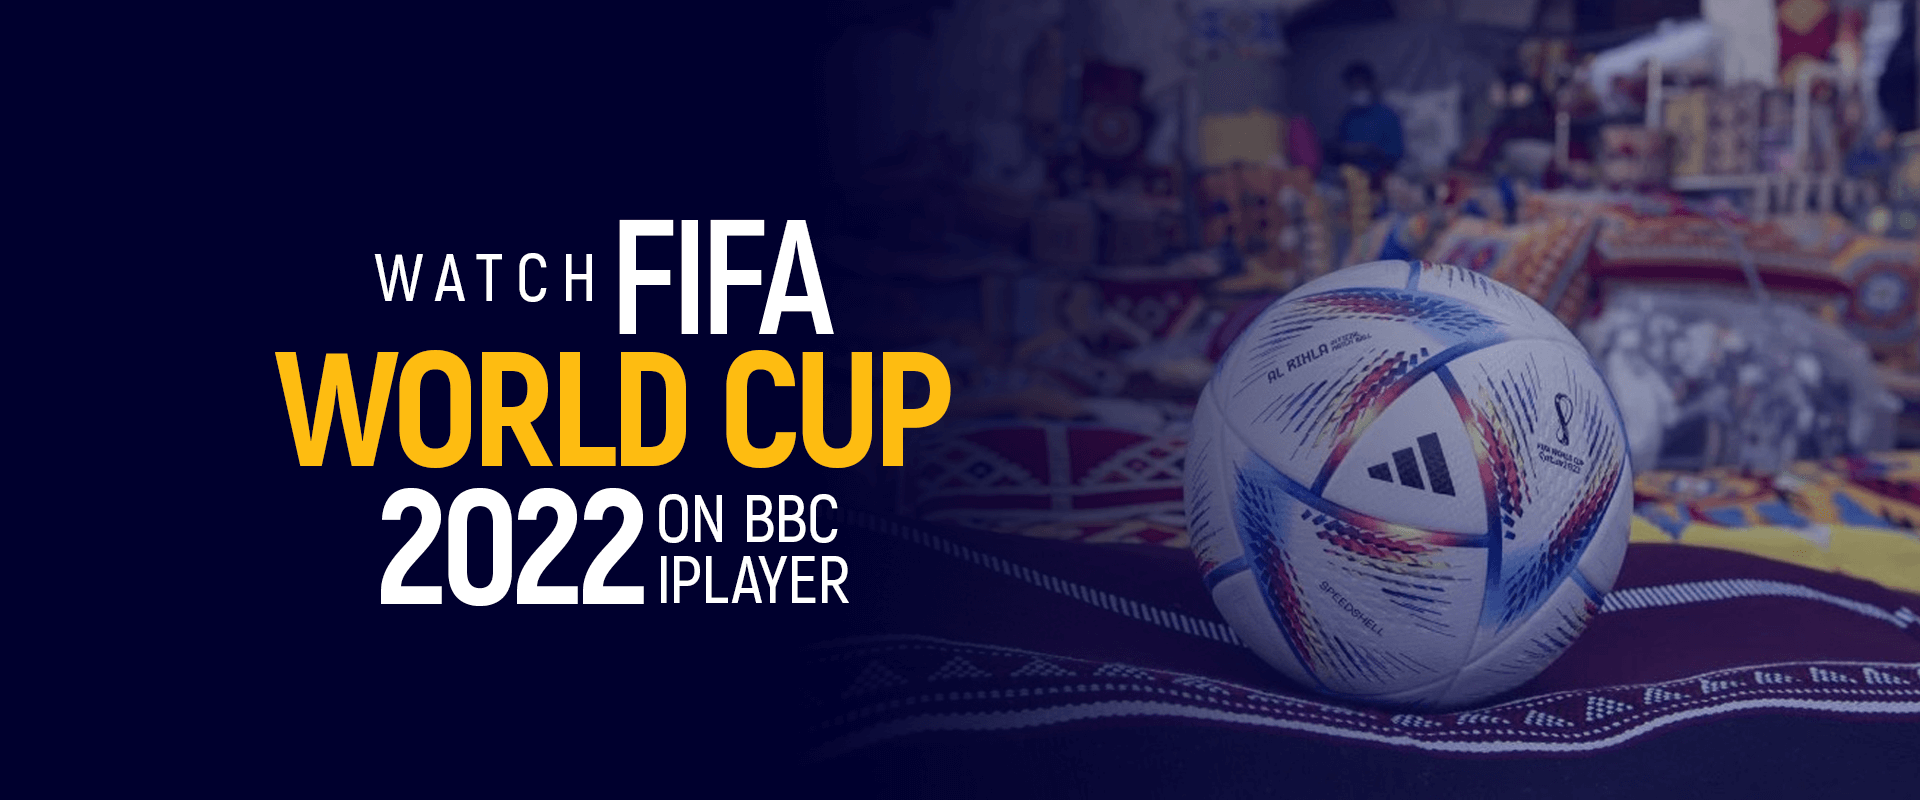 bbc watch world cup live